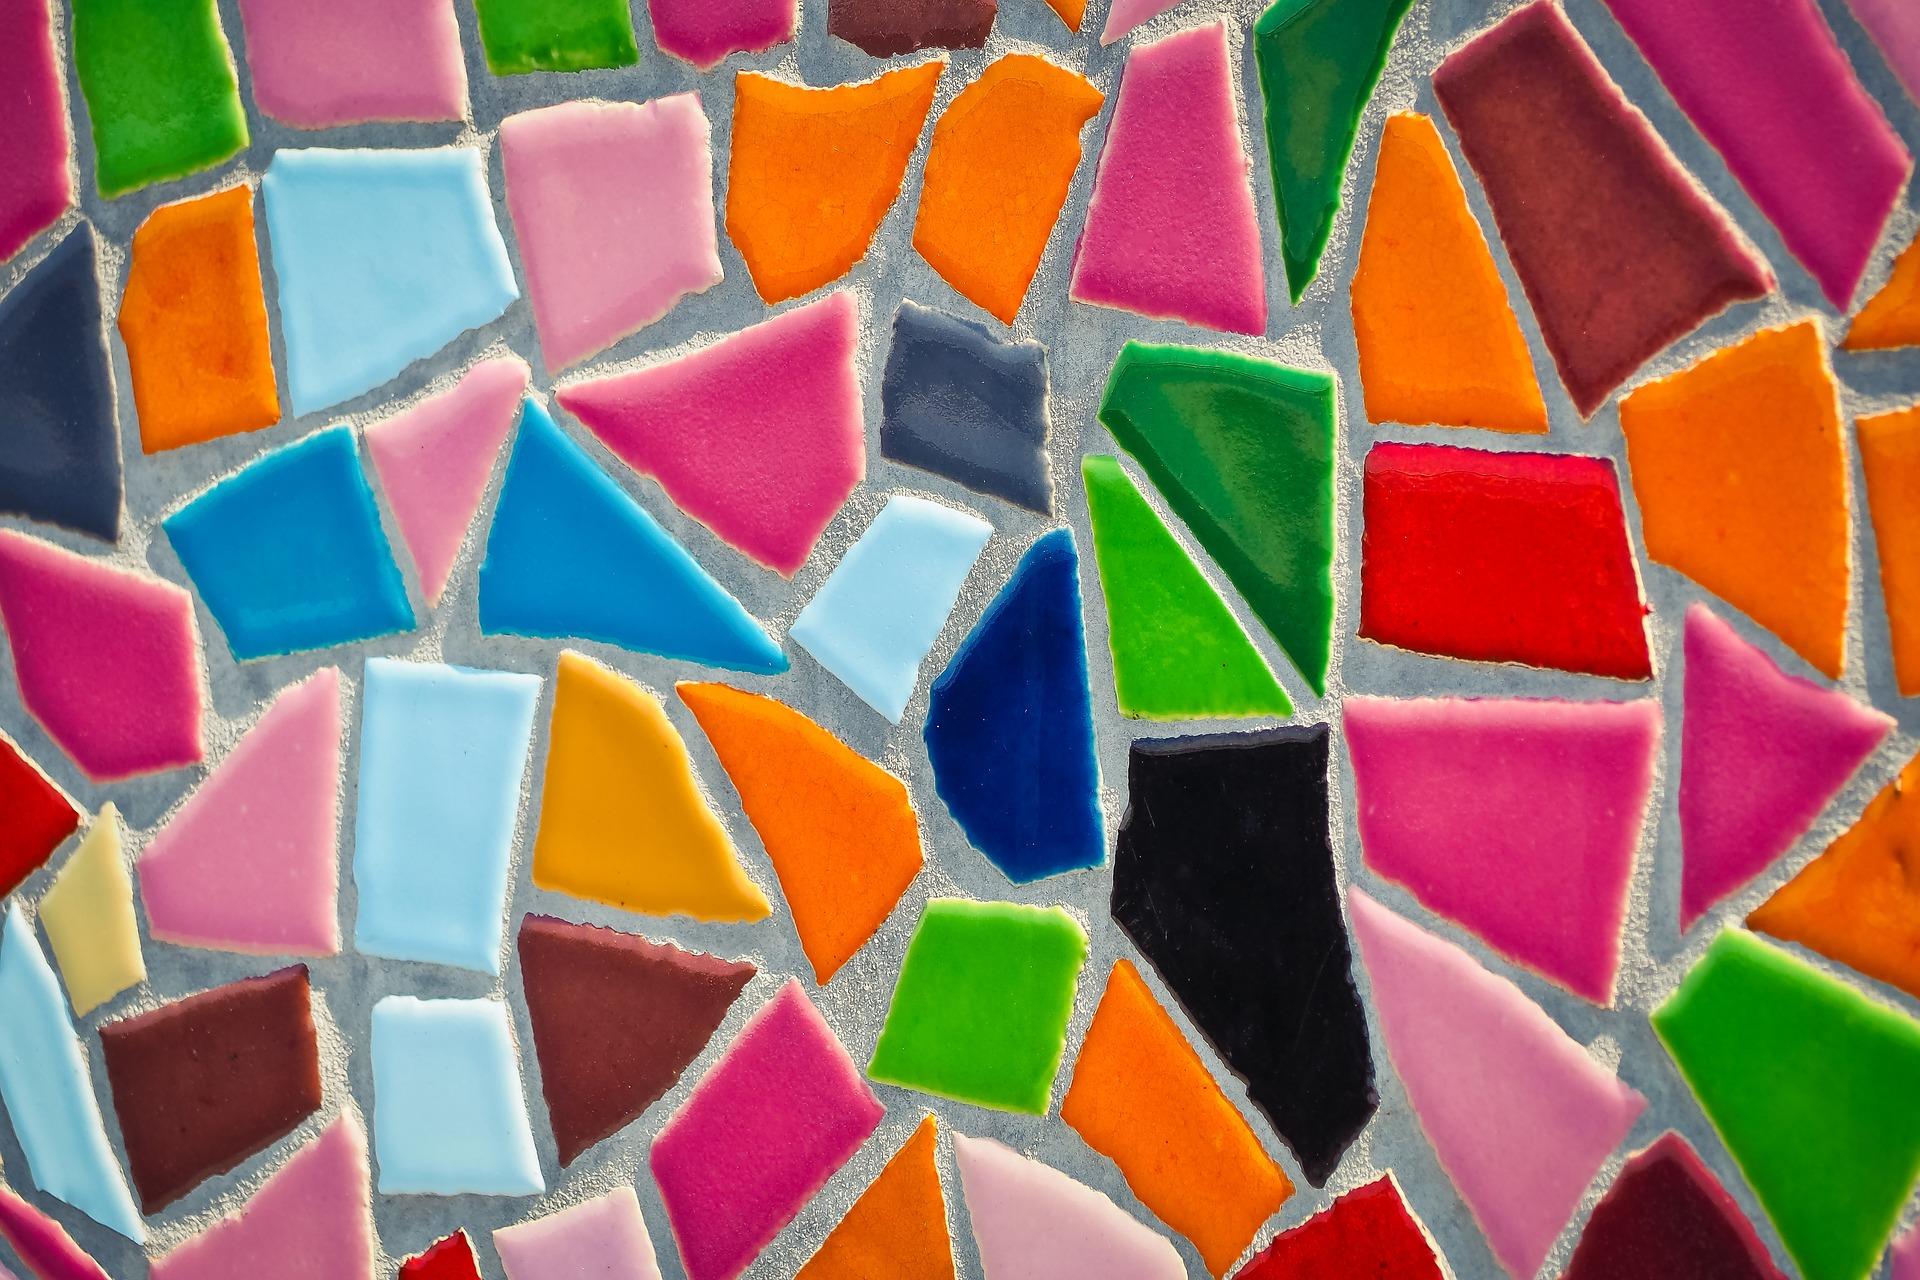 Tile mosaic